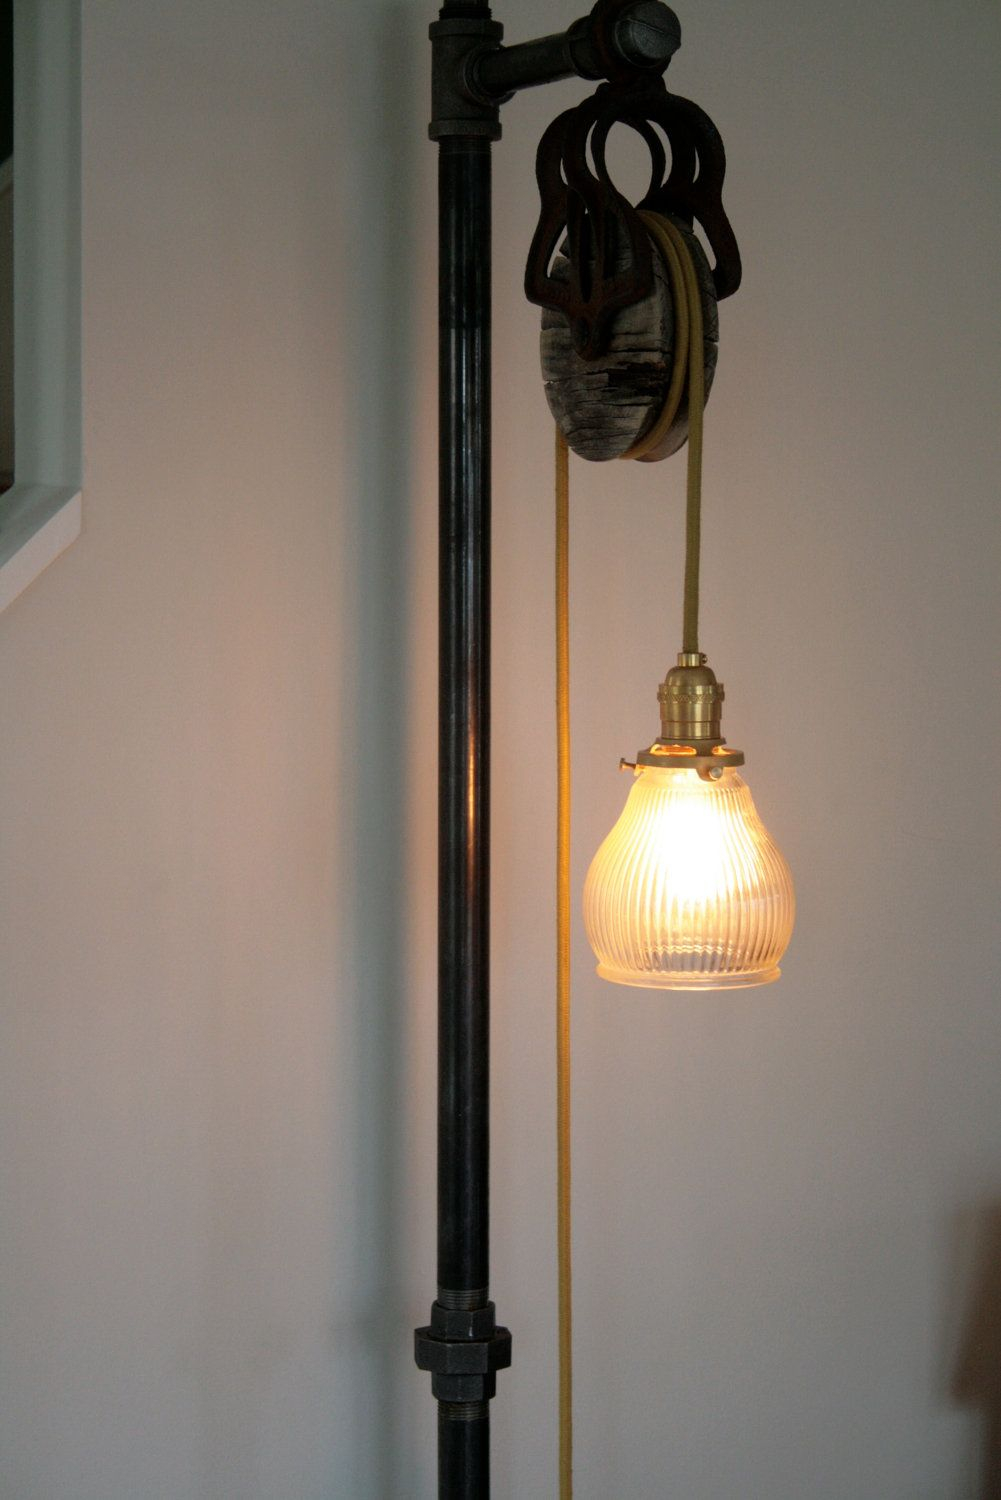 Vintage Industrial Floor Lamp 34500 Via Etsy intended for measurements 1001 X 1500